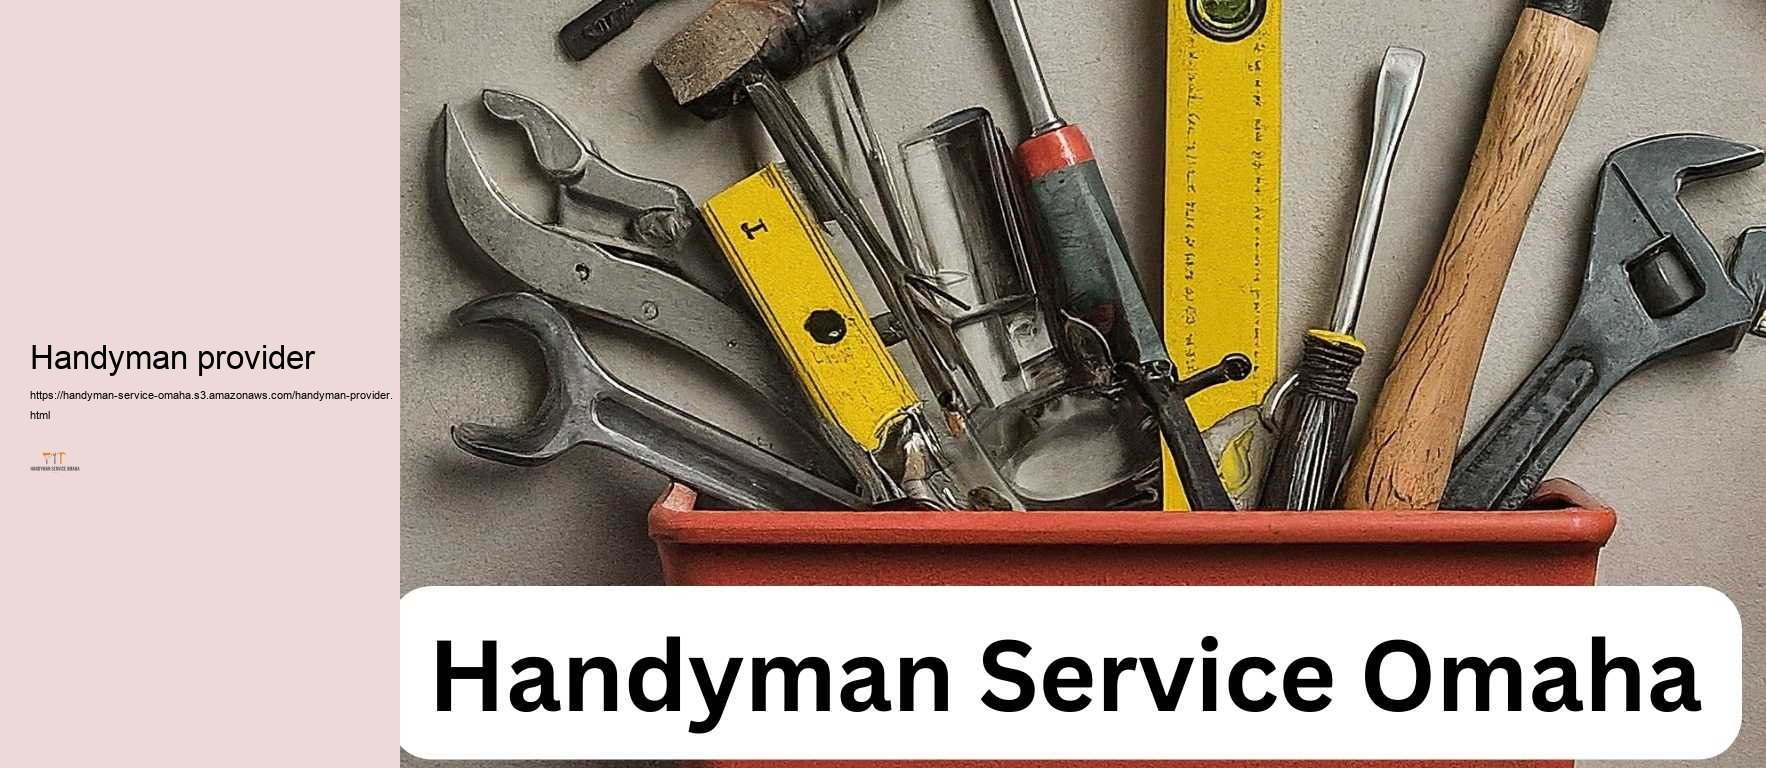 Handyman provider